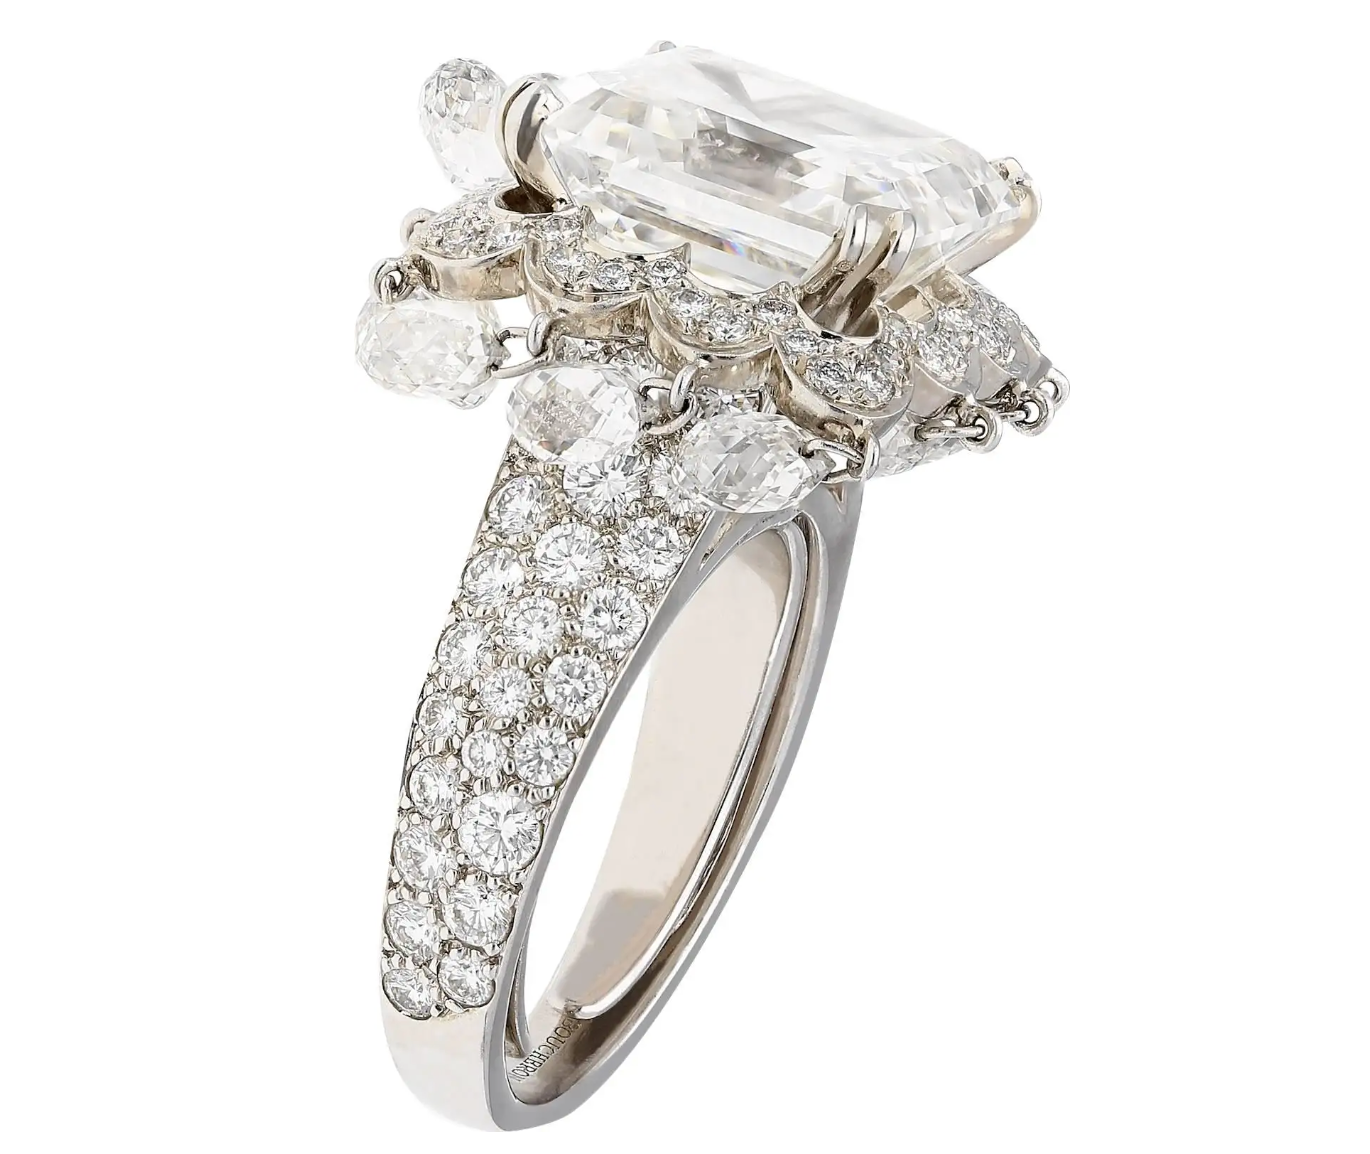 Boucheron-Laperouse-8_03-Carat-Emerald-Cut-G-VS1-GIA-Certified-Diamond-Ring-Rings-2.png